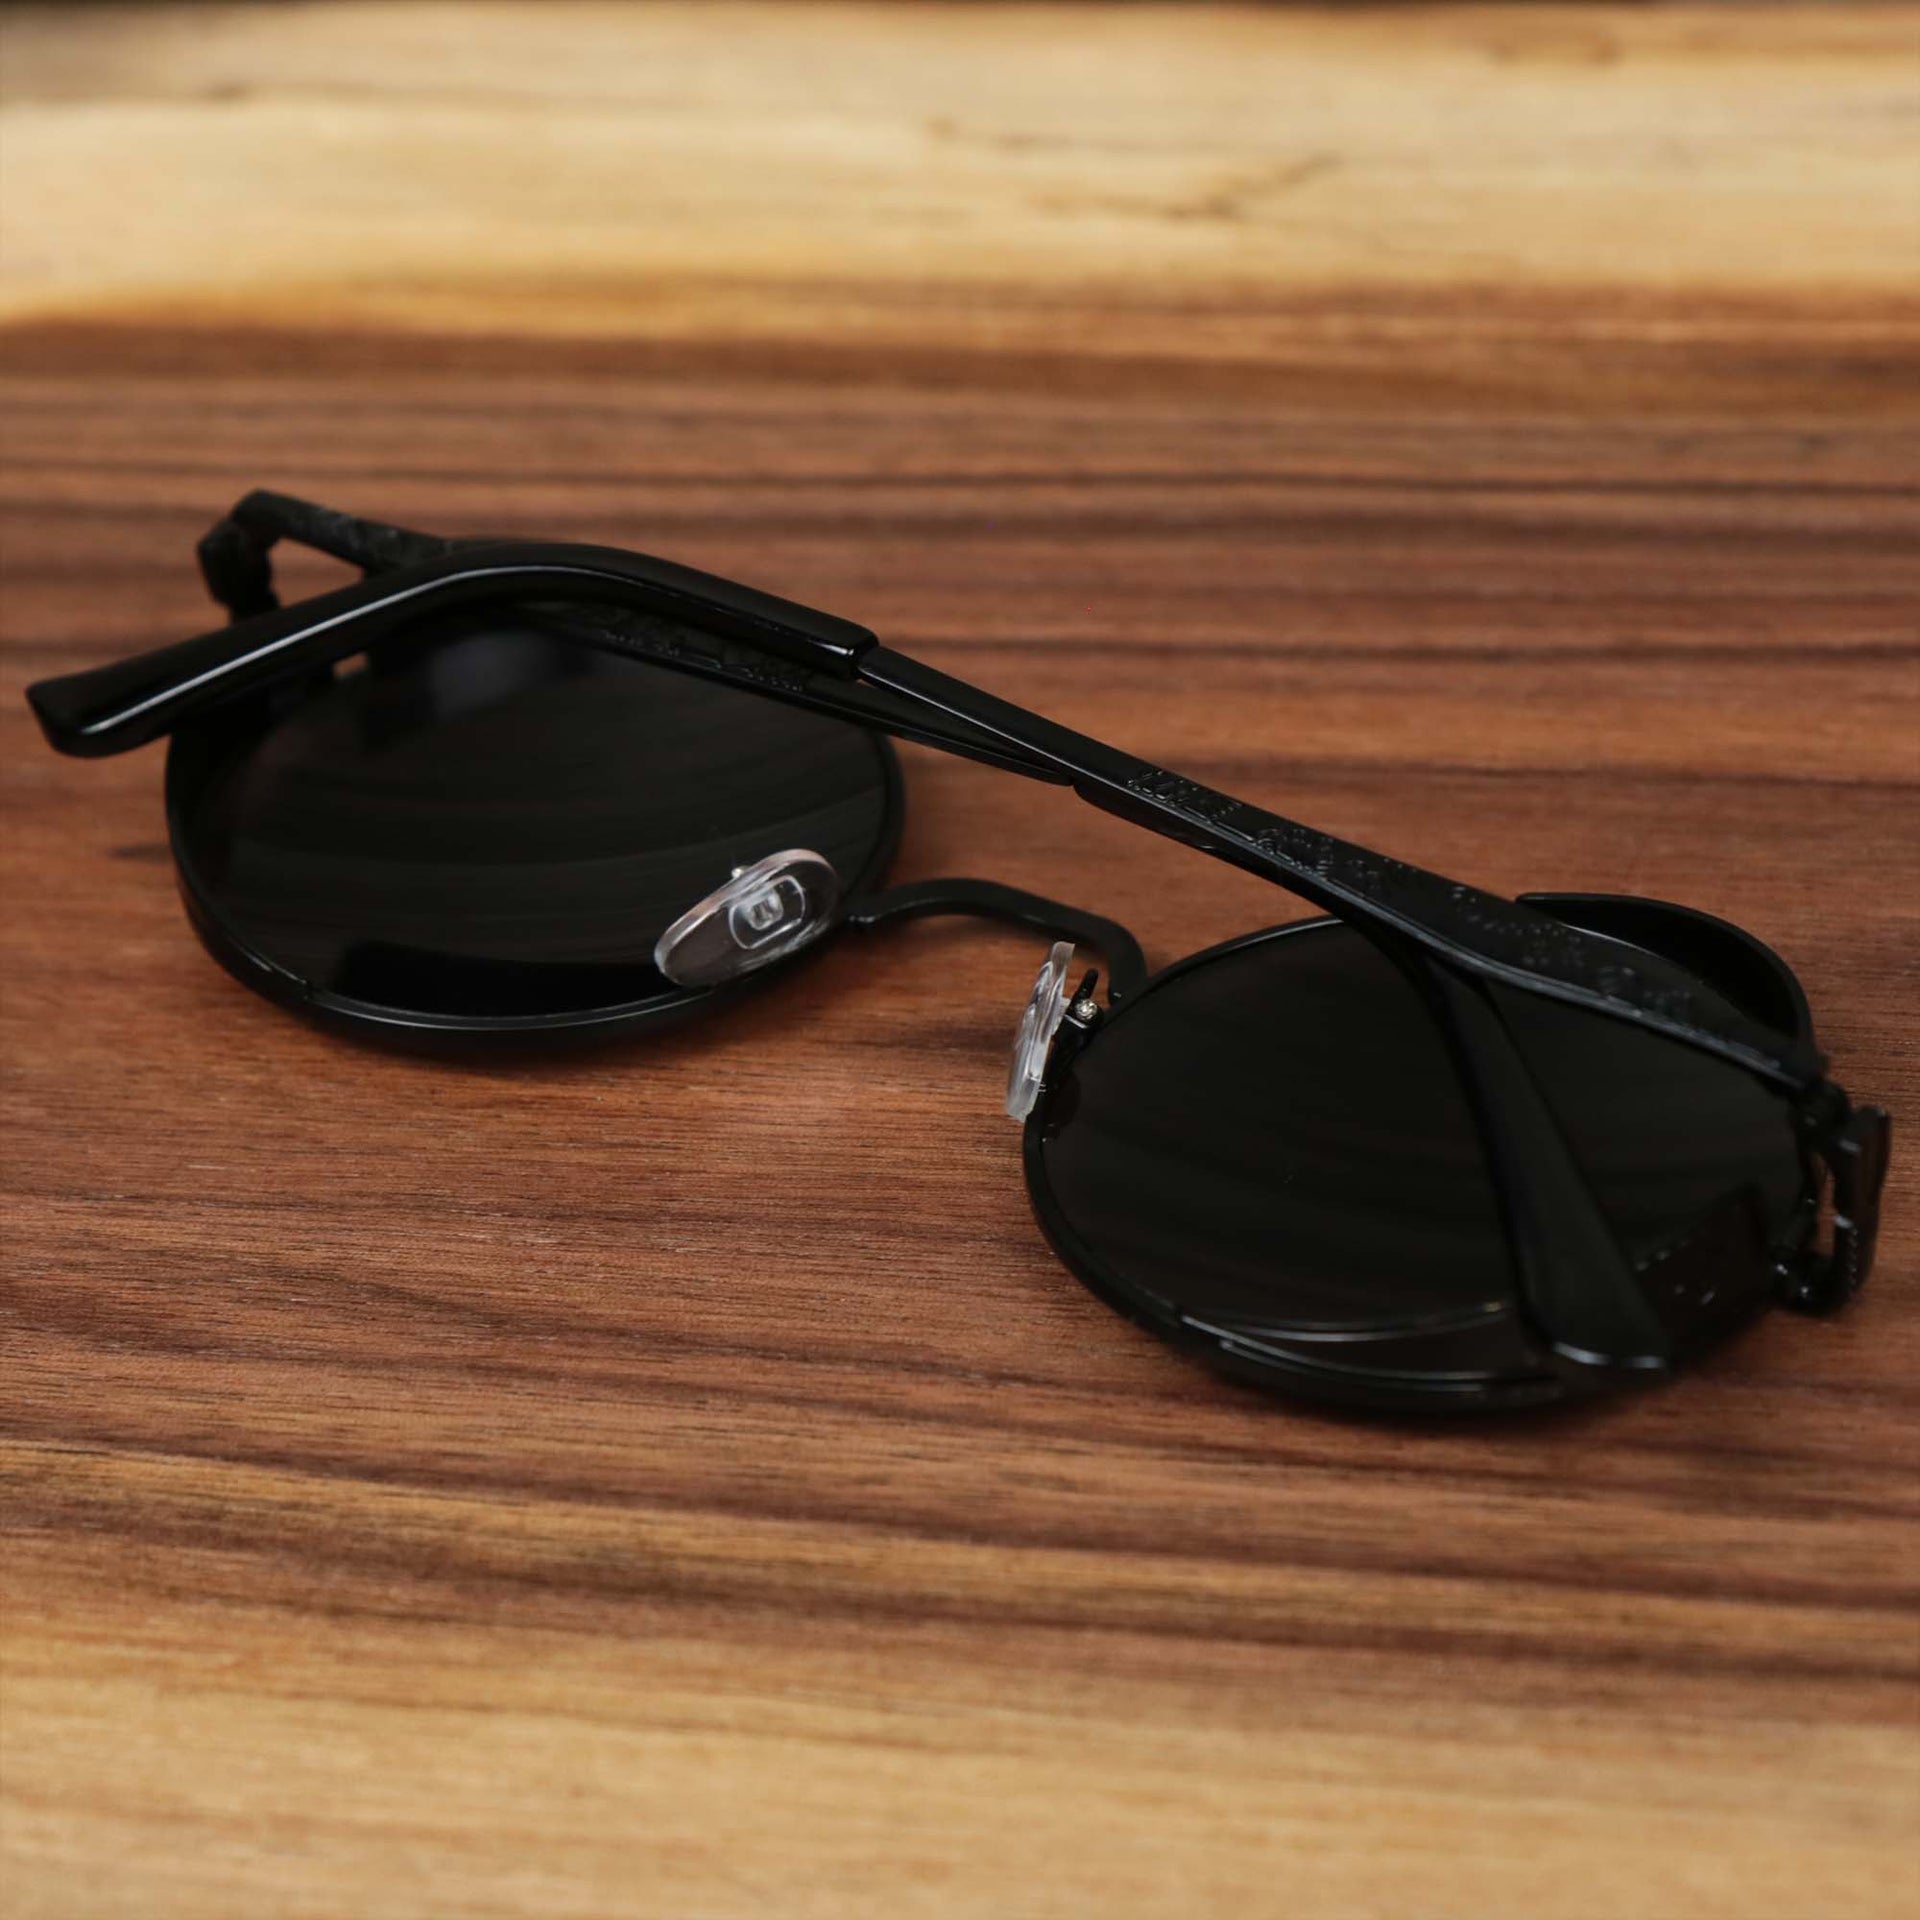 The Round Frame Arched Bridge Black Lens Sunglasses with Black Frame folded up